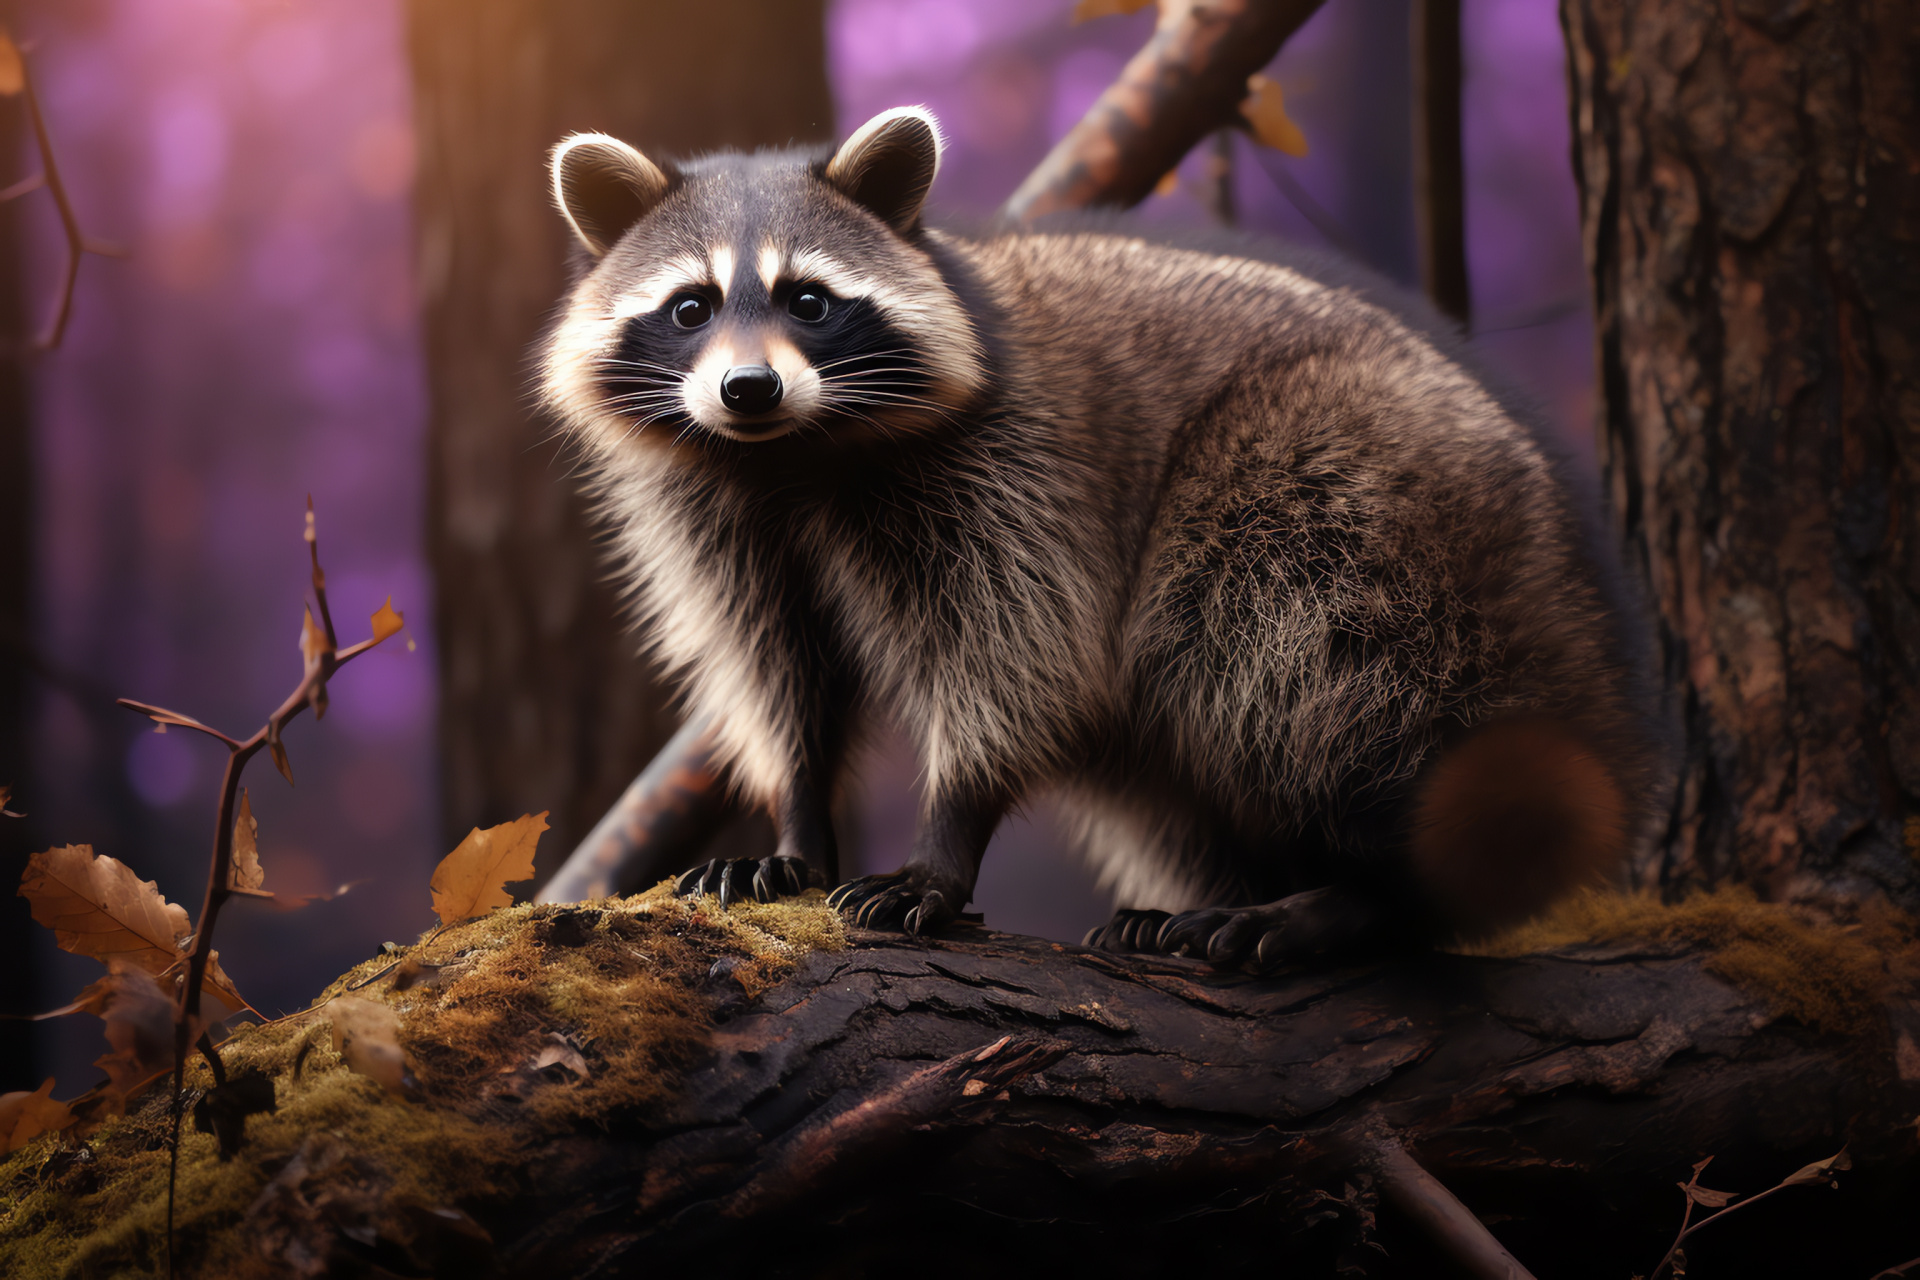 Graceful raccoon, amethyst gaze, plush fur, nocturnal animal, shaded surroundings, HD Desktop Image